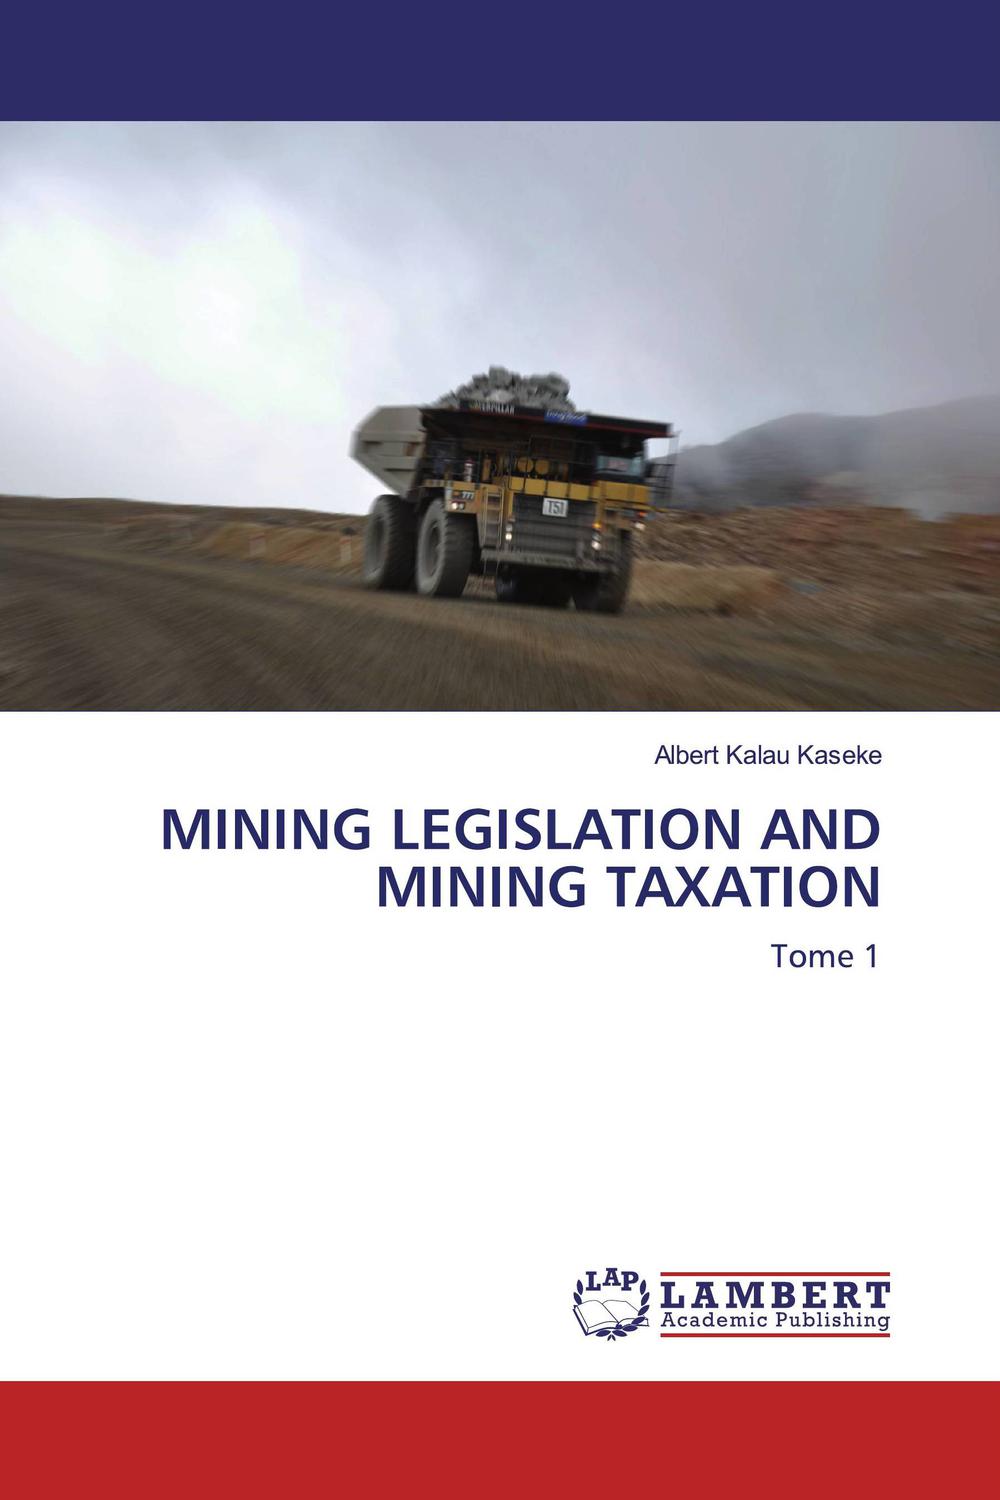 mining legislation and mining taxation tome 1 1st edition albert kalau kaseke 620043462x, 9786200434623